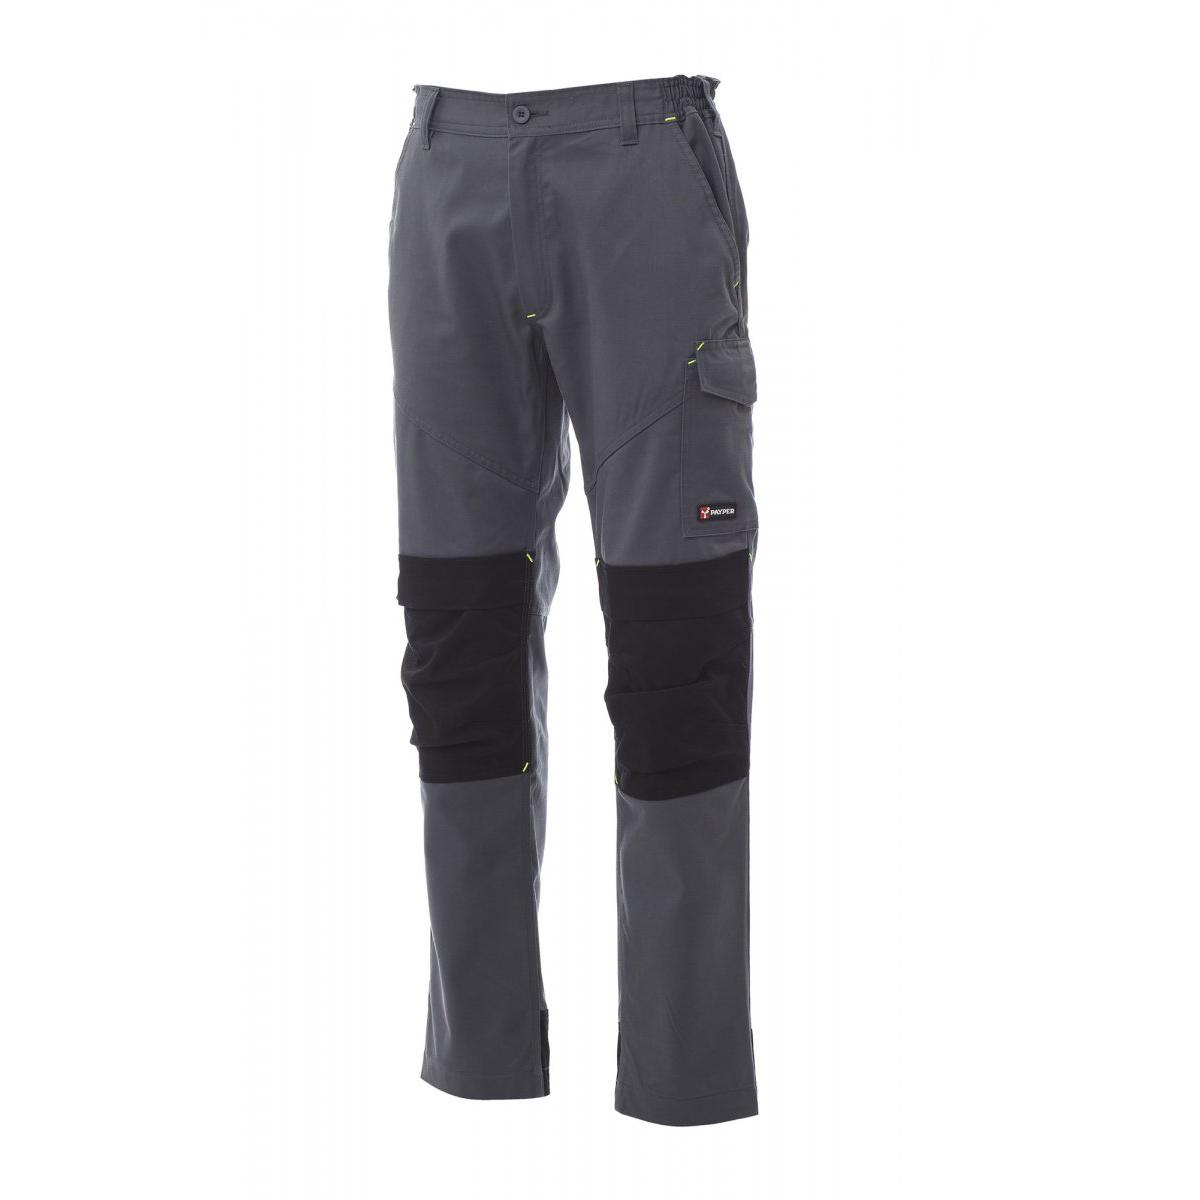 Pantaloni PAYPER-WORKER TECH per il comfort e la praticit